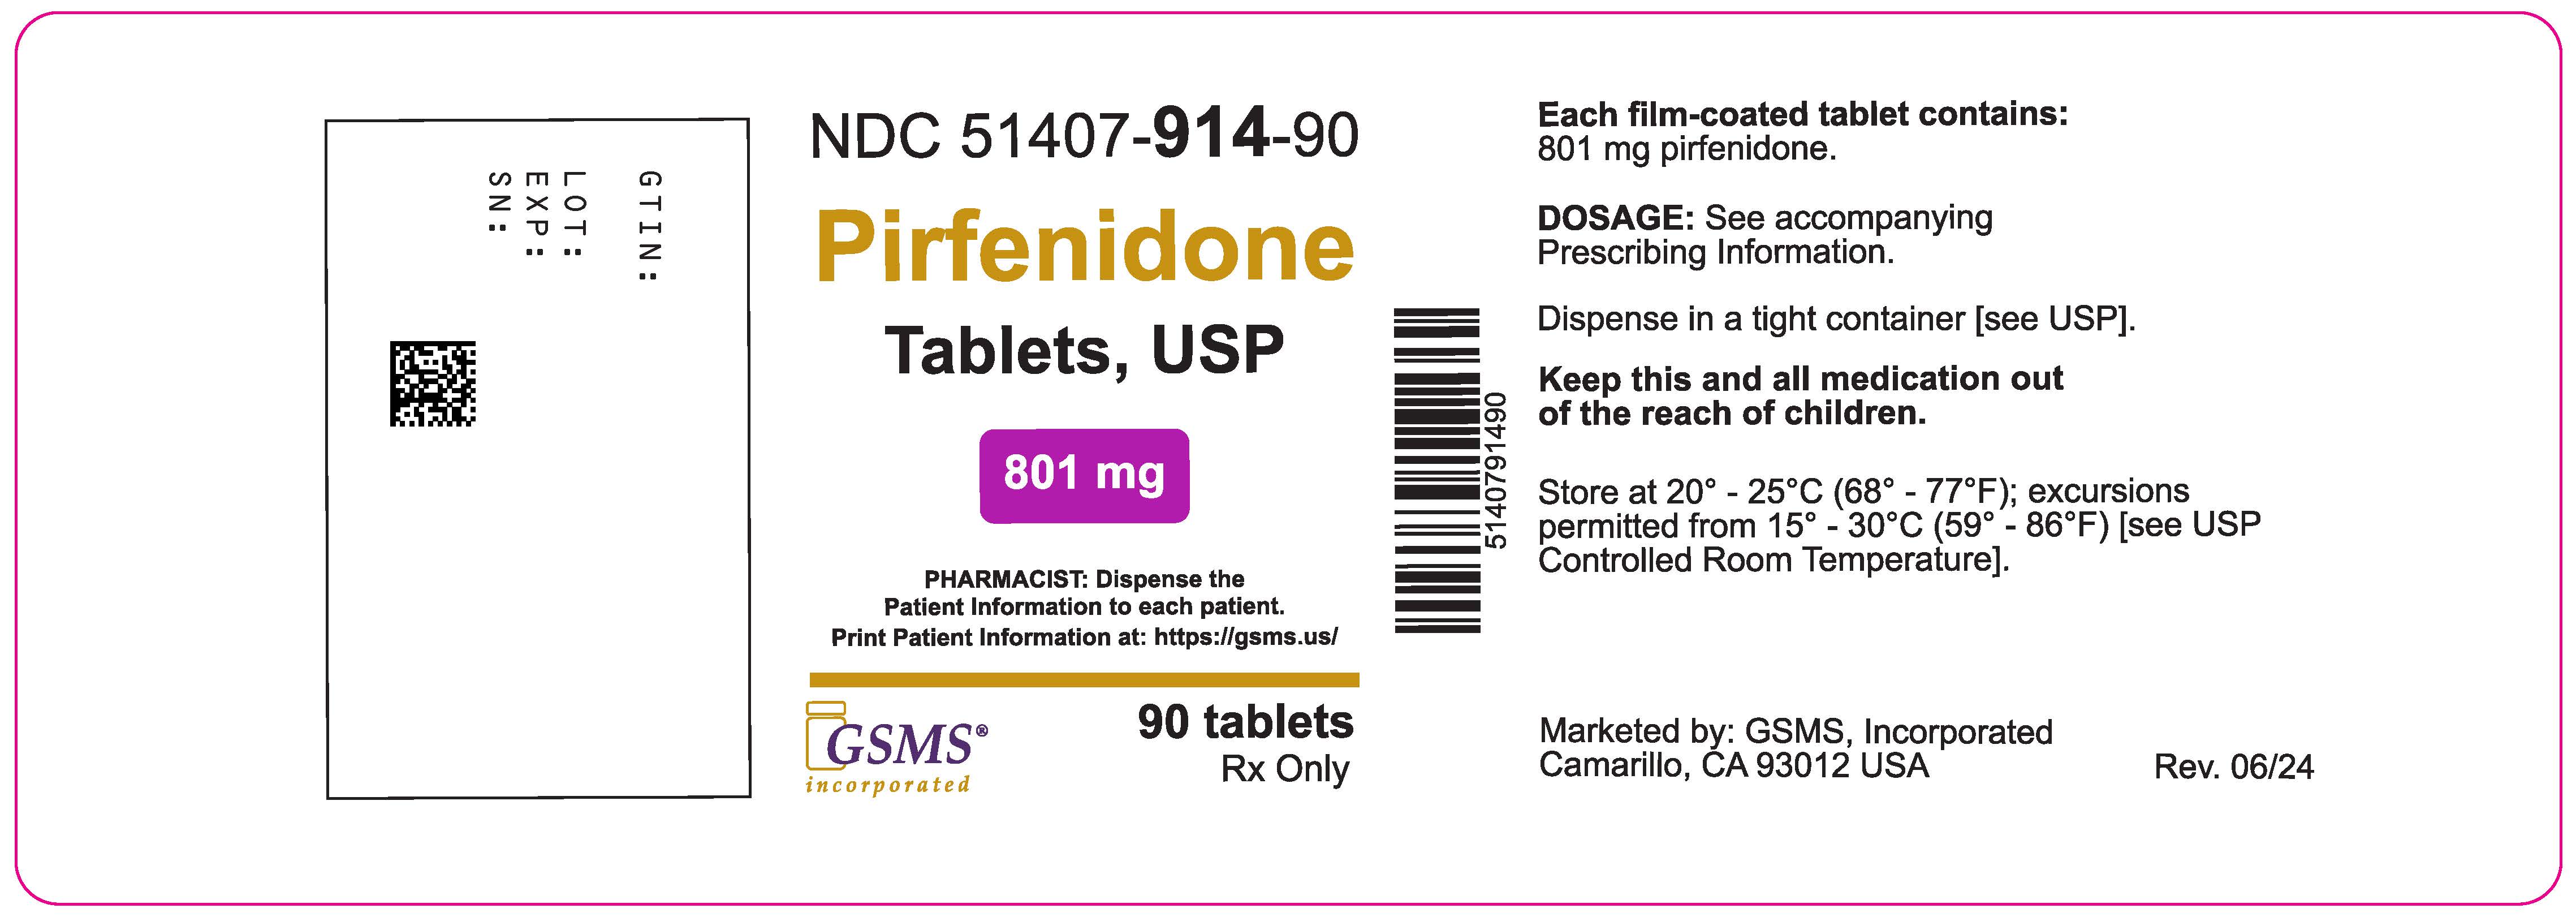 51407-914-90OL - Pirfenidone 801 mg - Rev. 0624.jpg